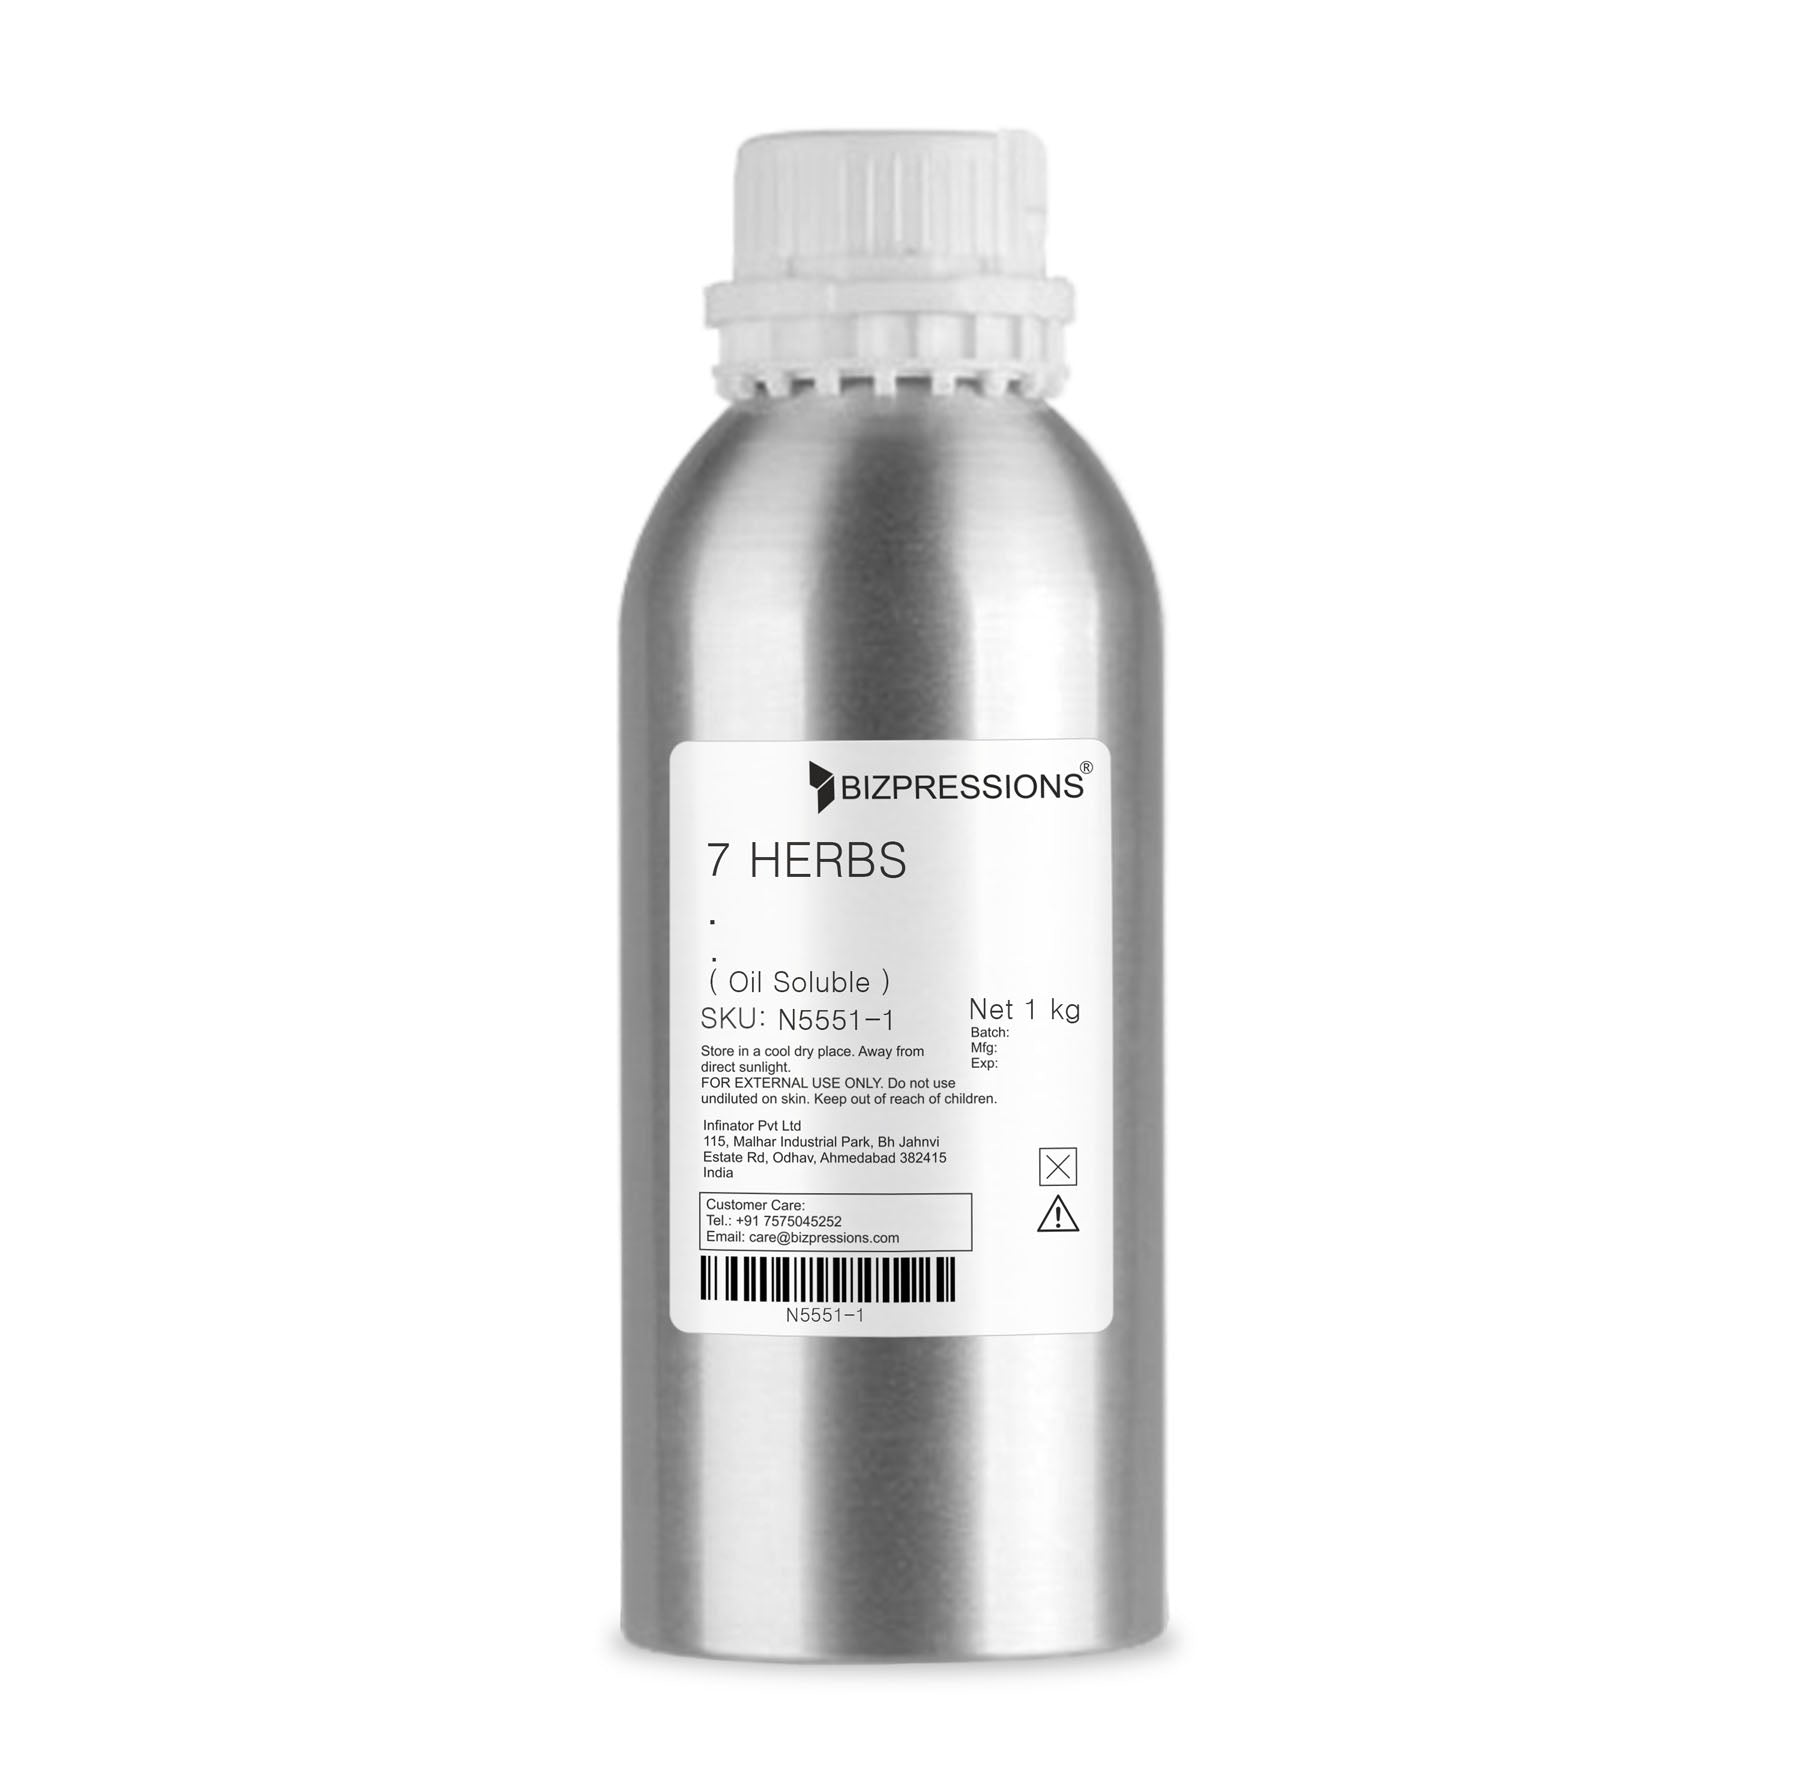 7 HERBS - Fragrance ( Oil Soluble ) - 1 kg